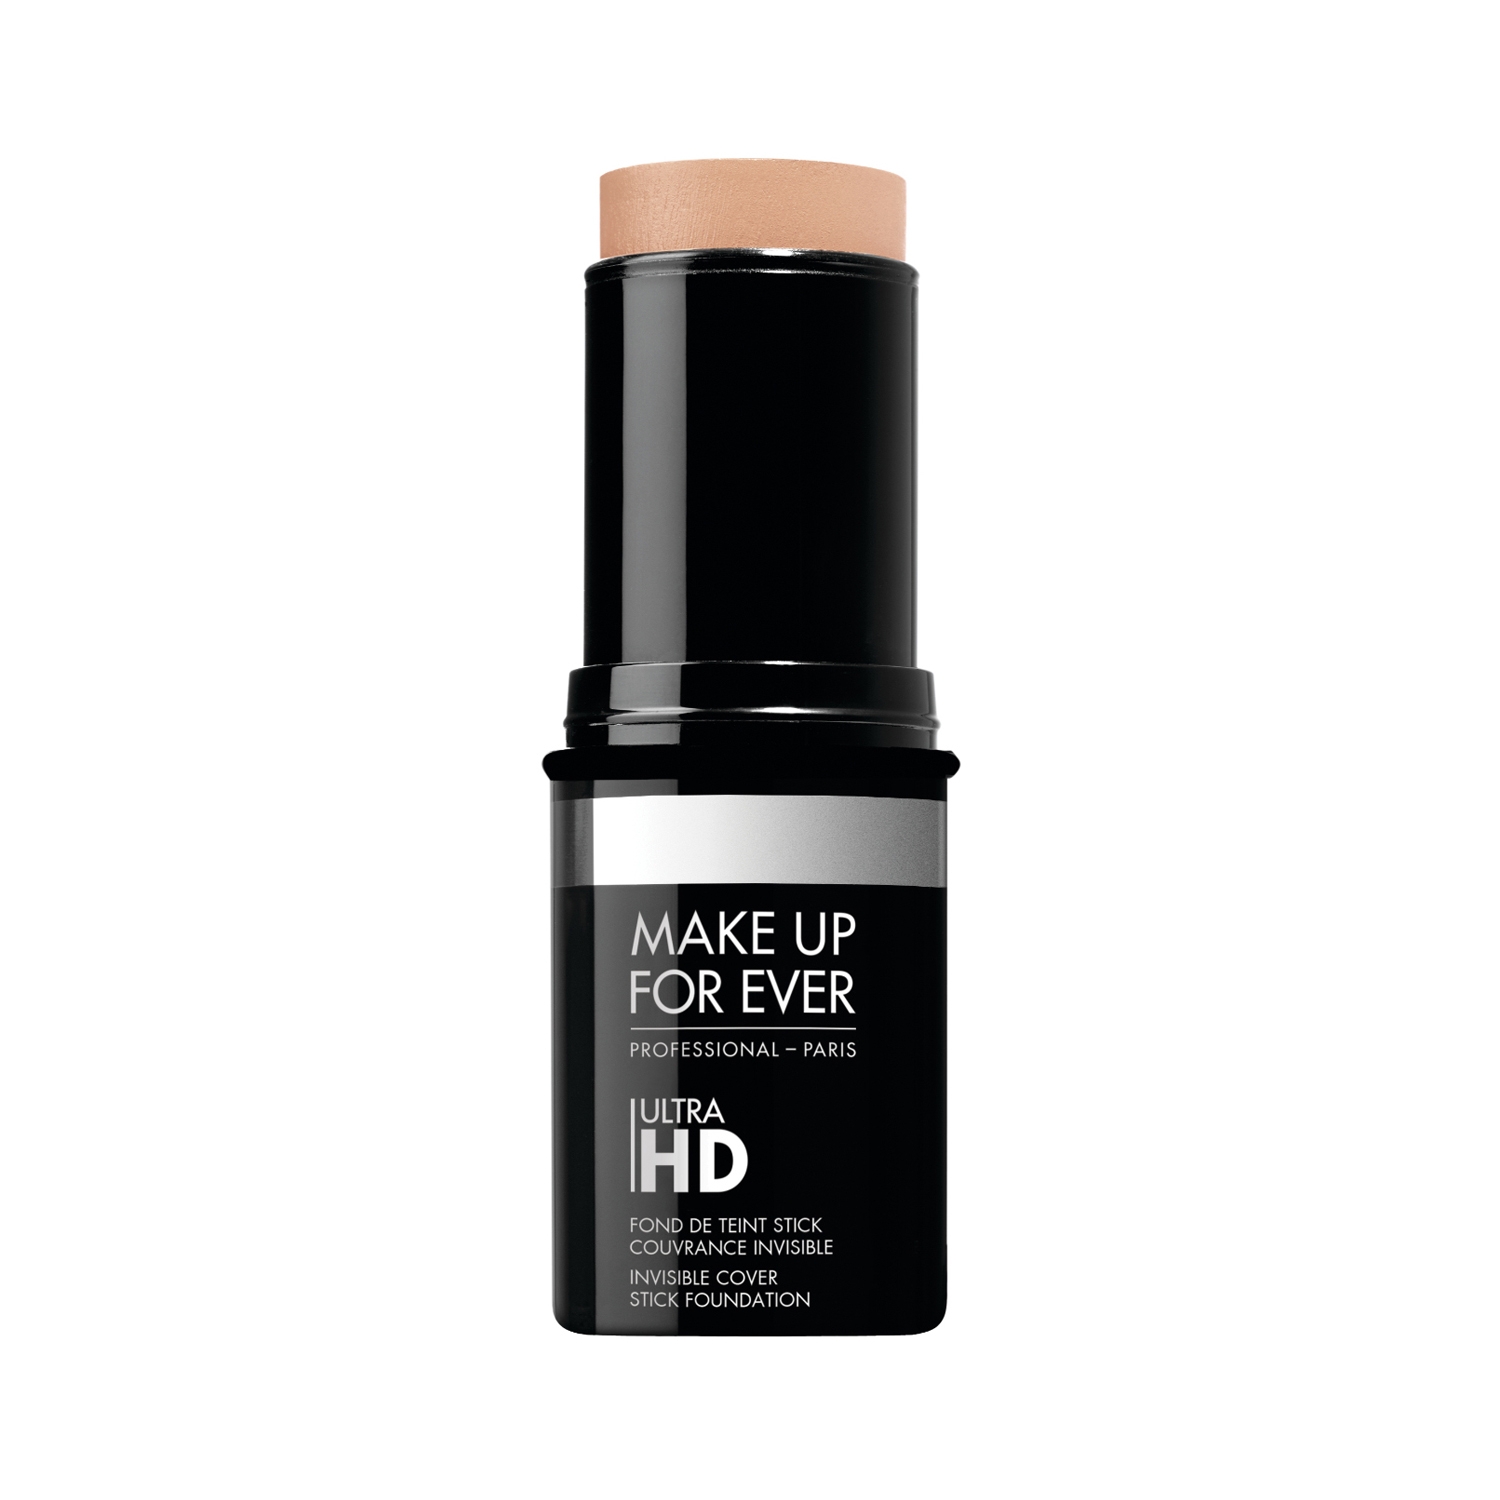 Make Up For Ever | Make Up For Ever Ultra HD Foundation Stick - Y315 Sand (12.5g)